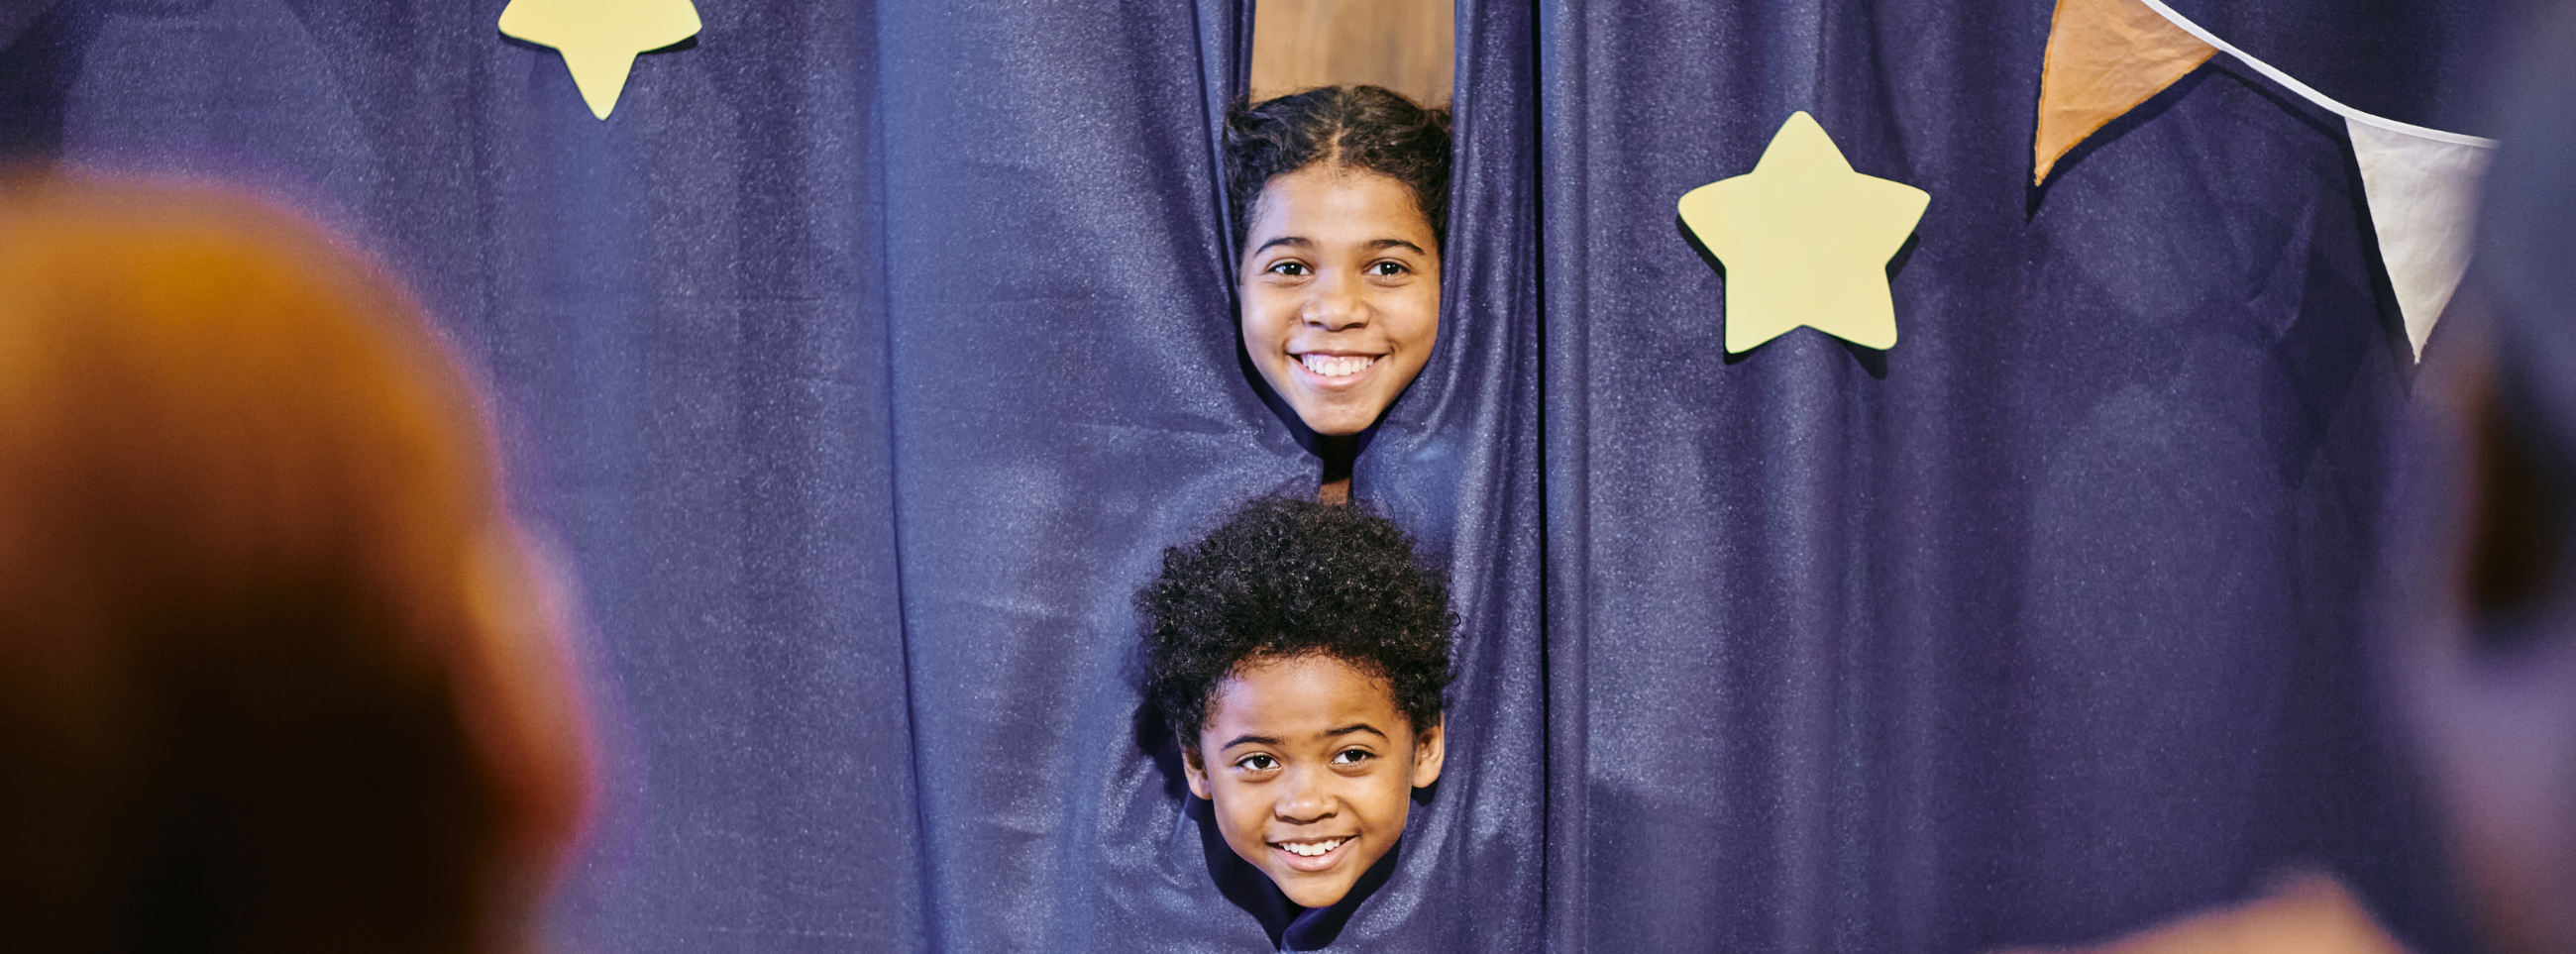 Children on stage behind a curtain